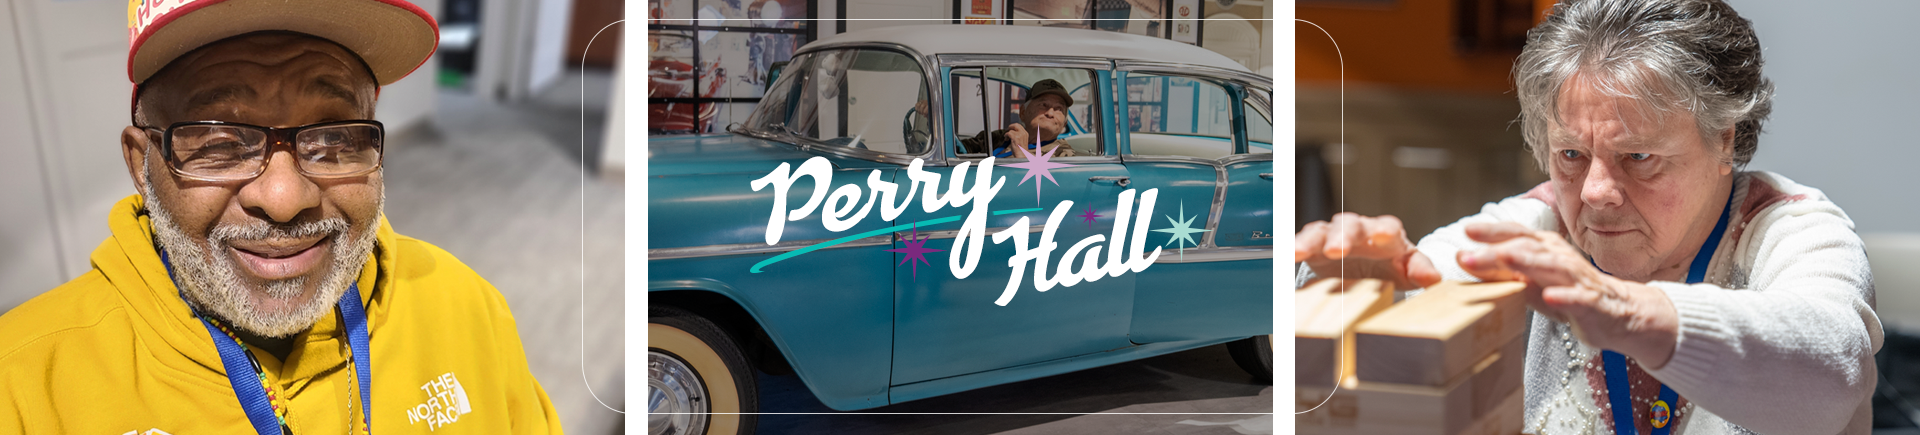 Perry Hall Blog